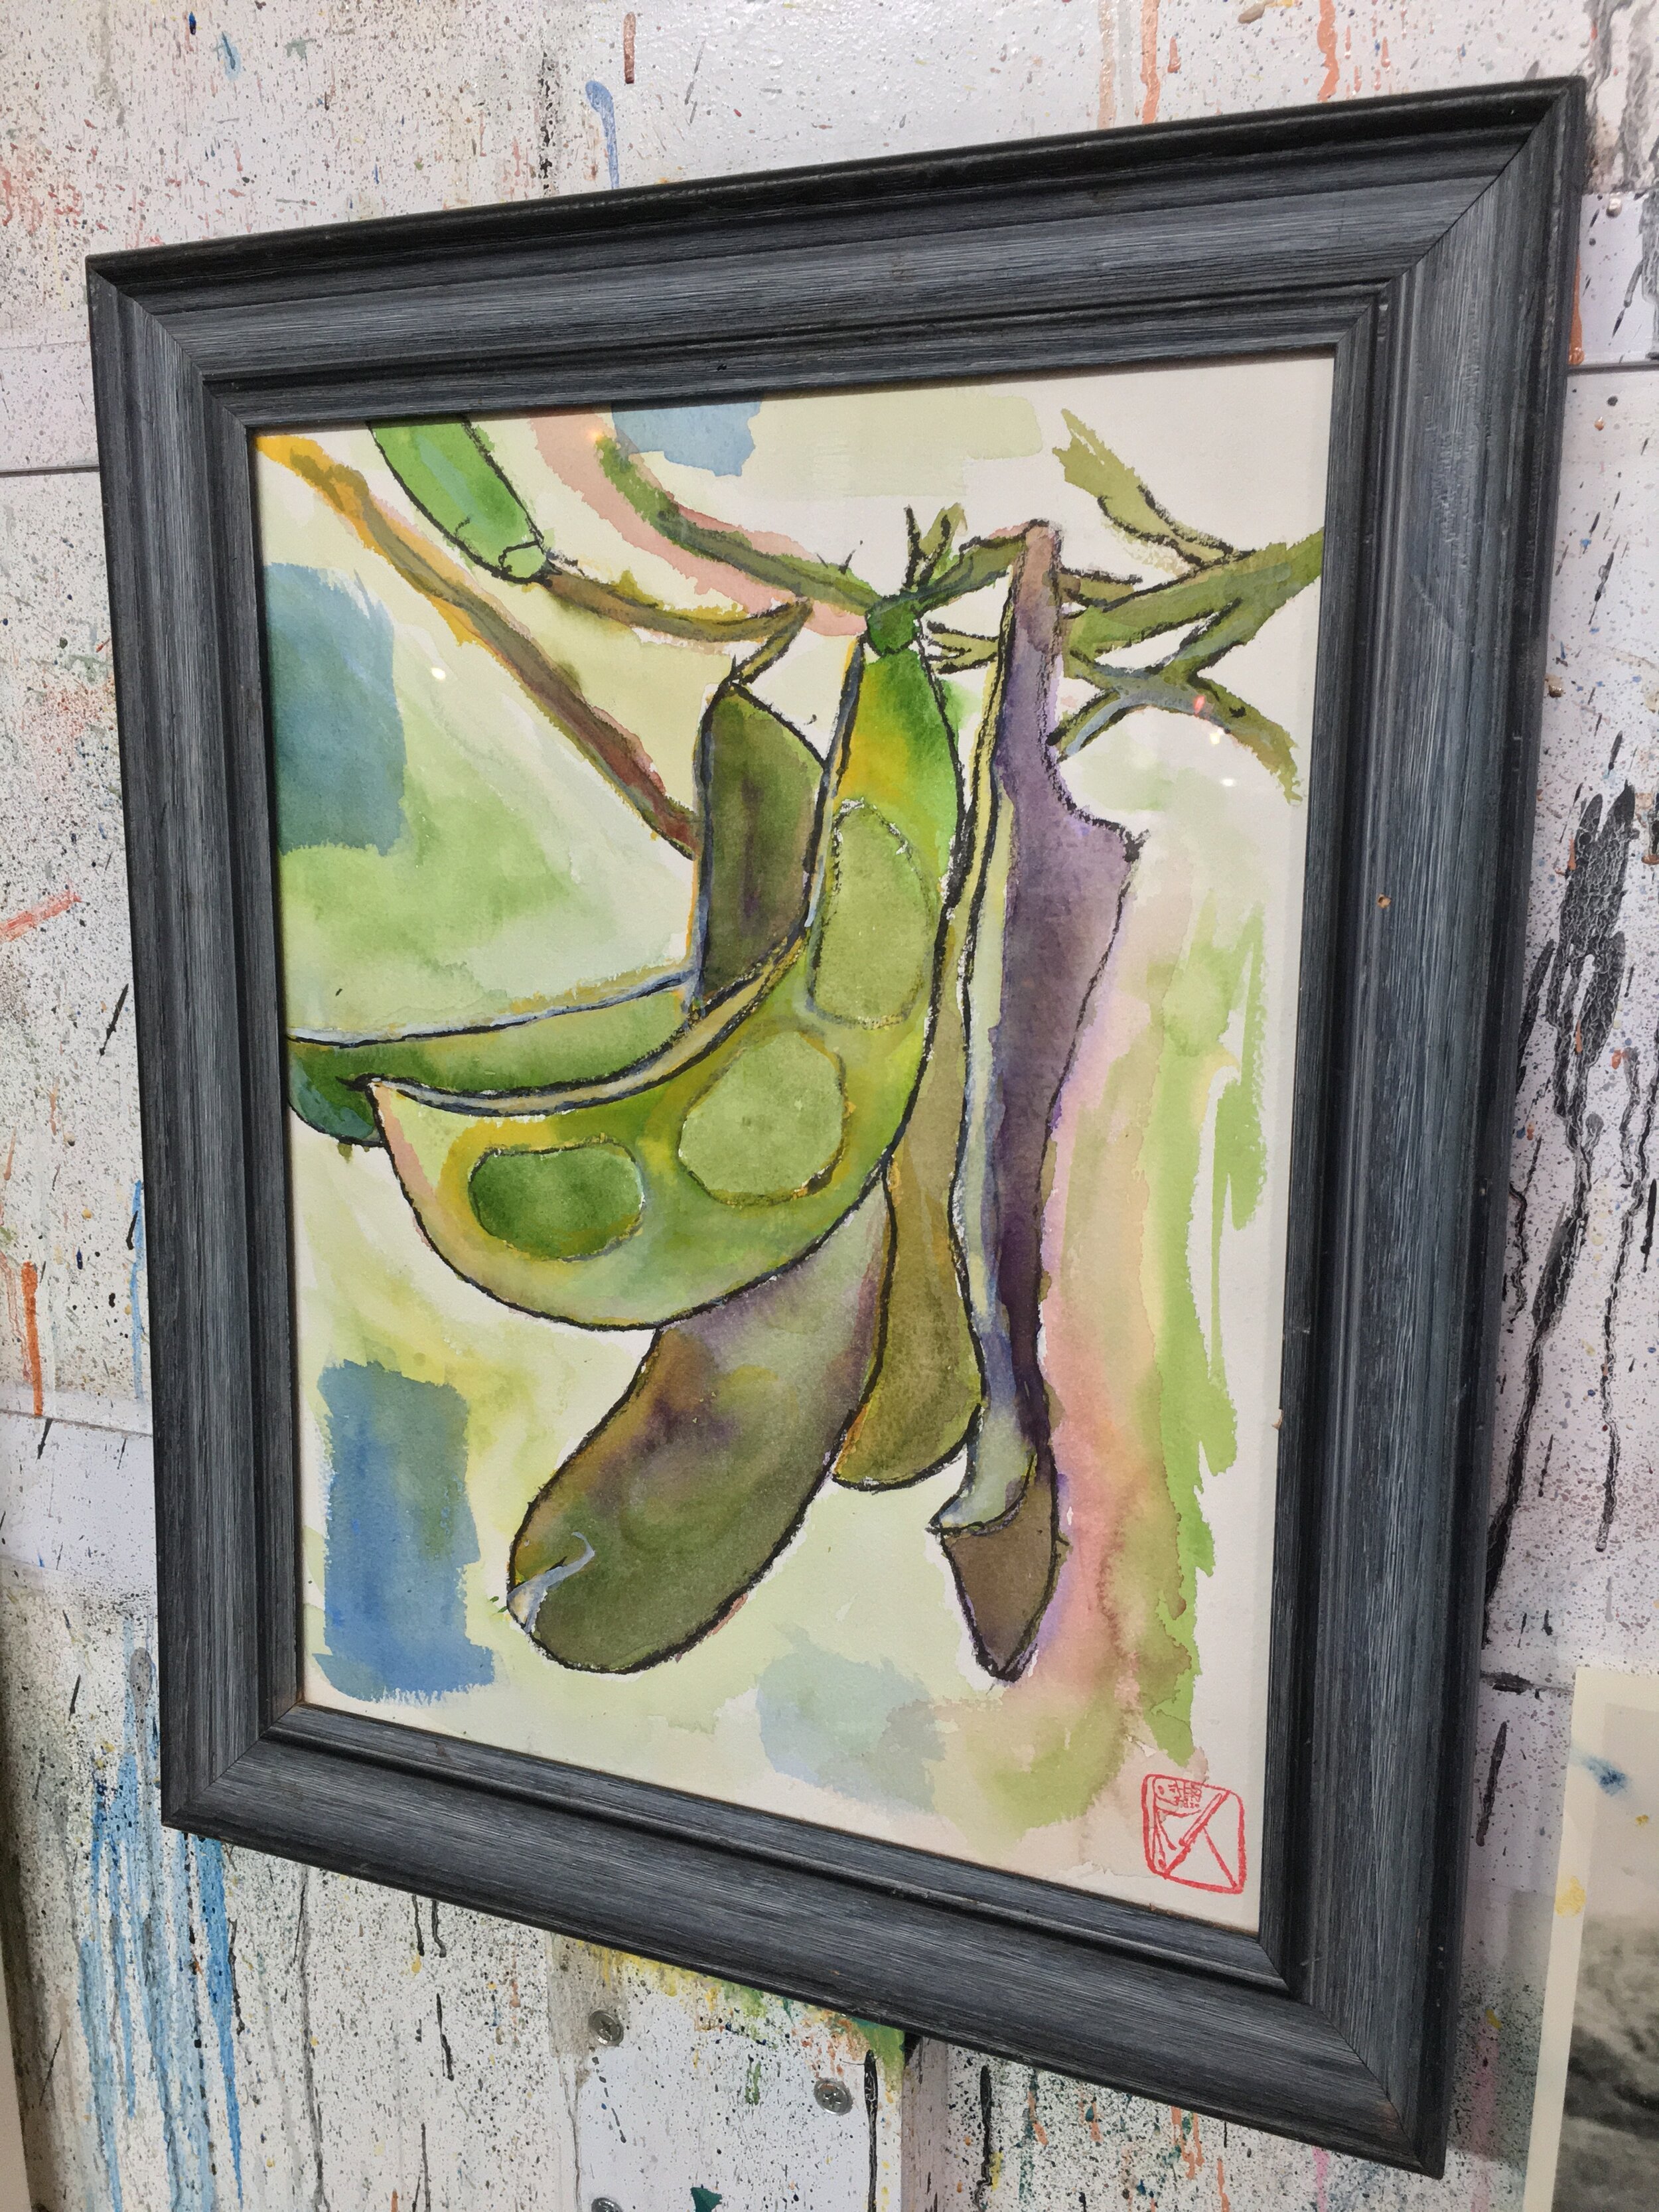 Lima+Beans+17x14+watercolor+pastel+framed.jpg